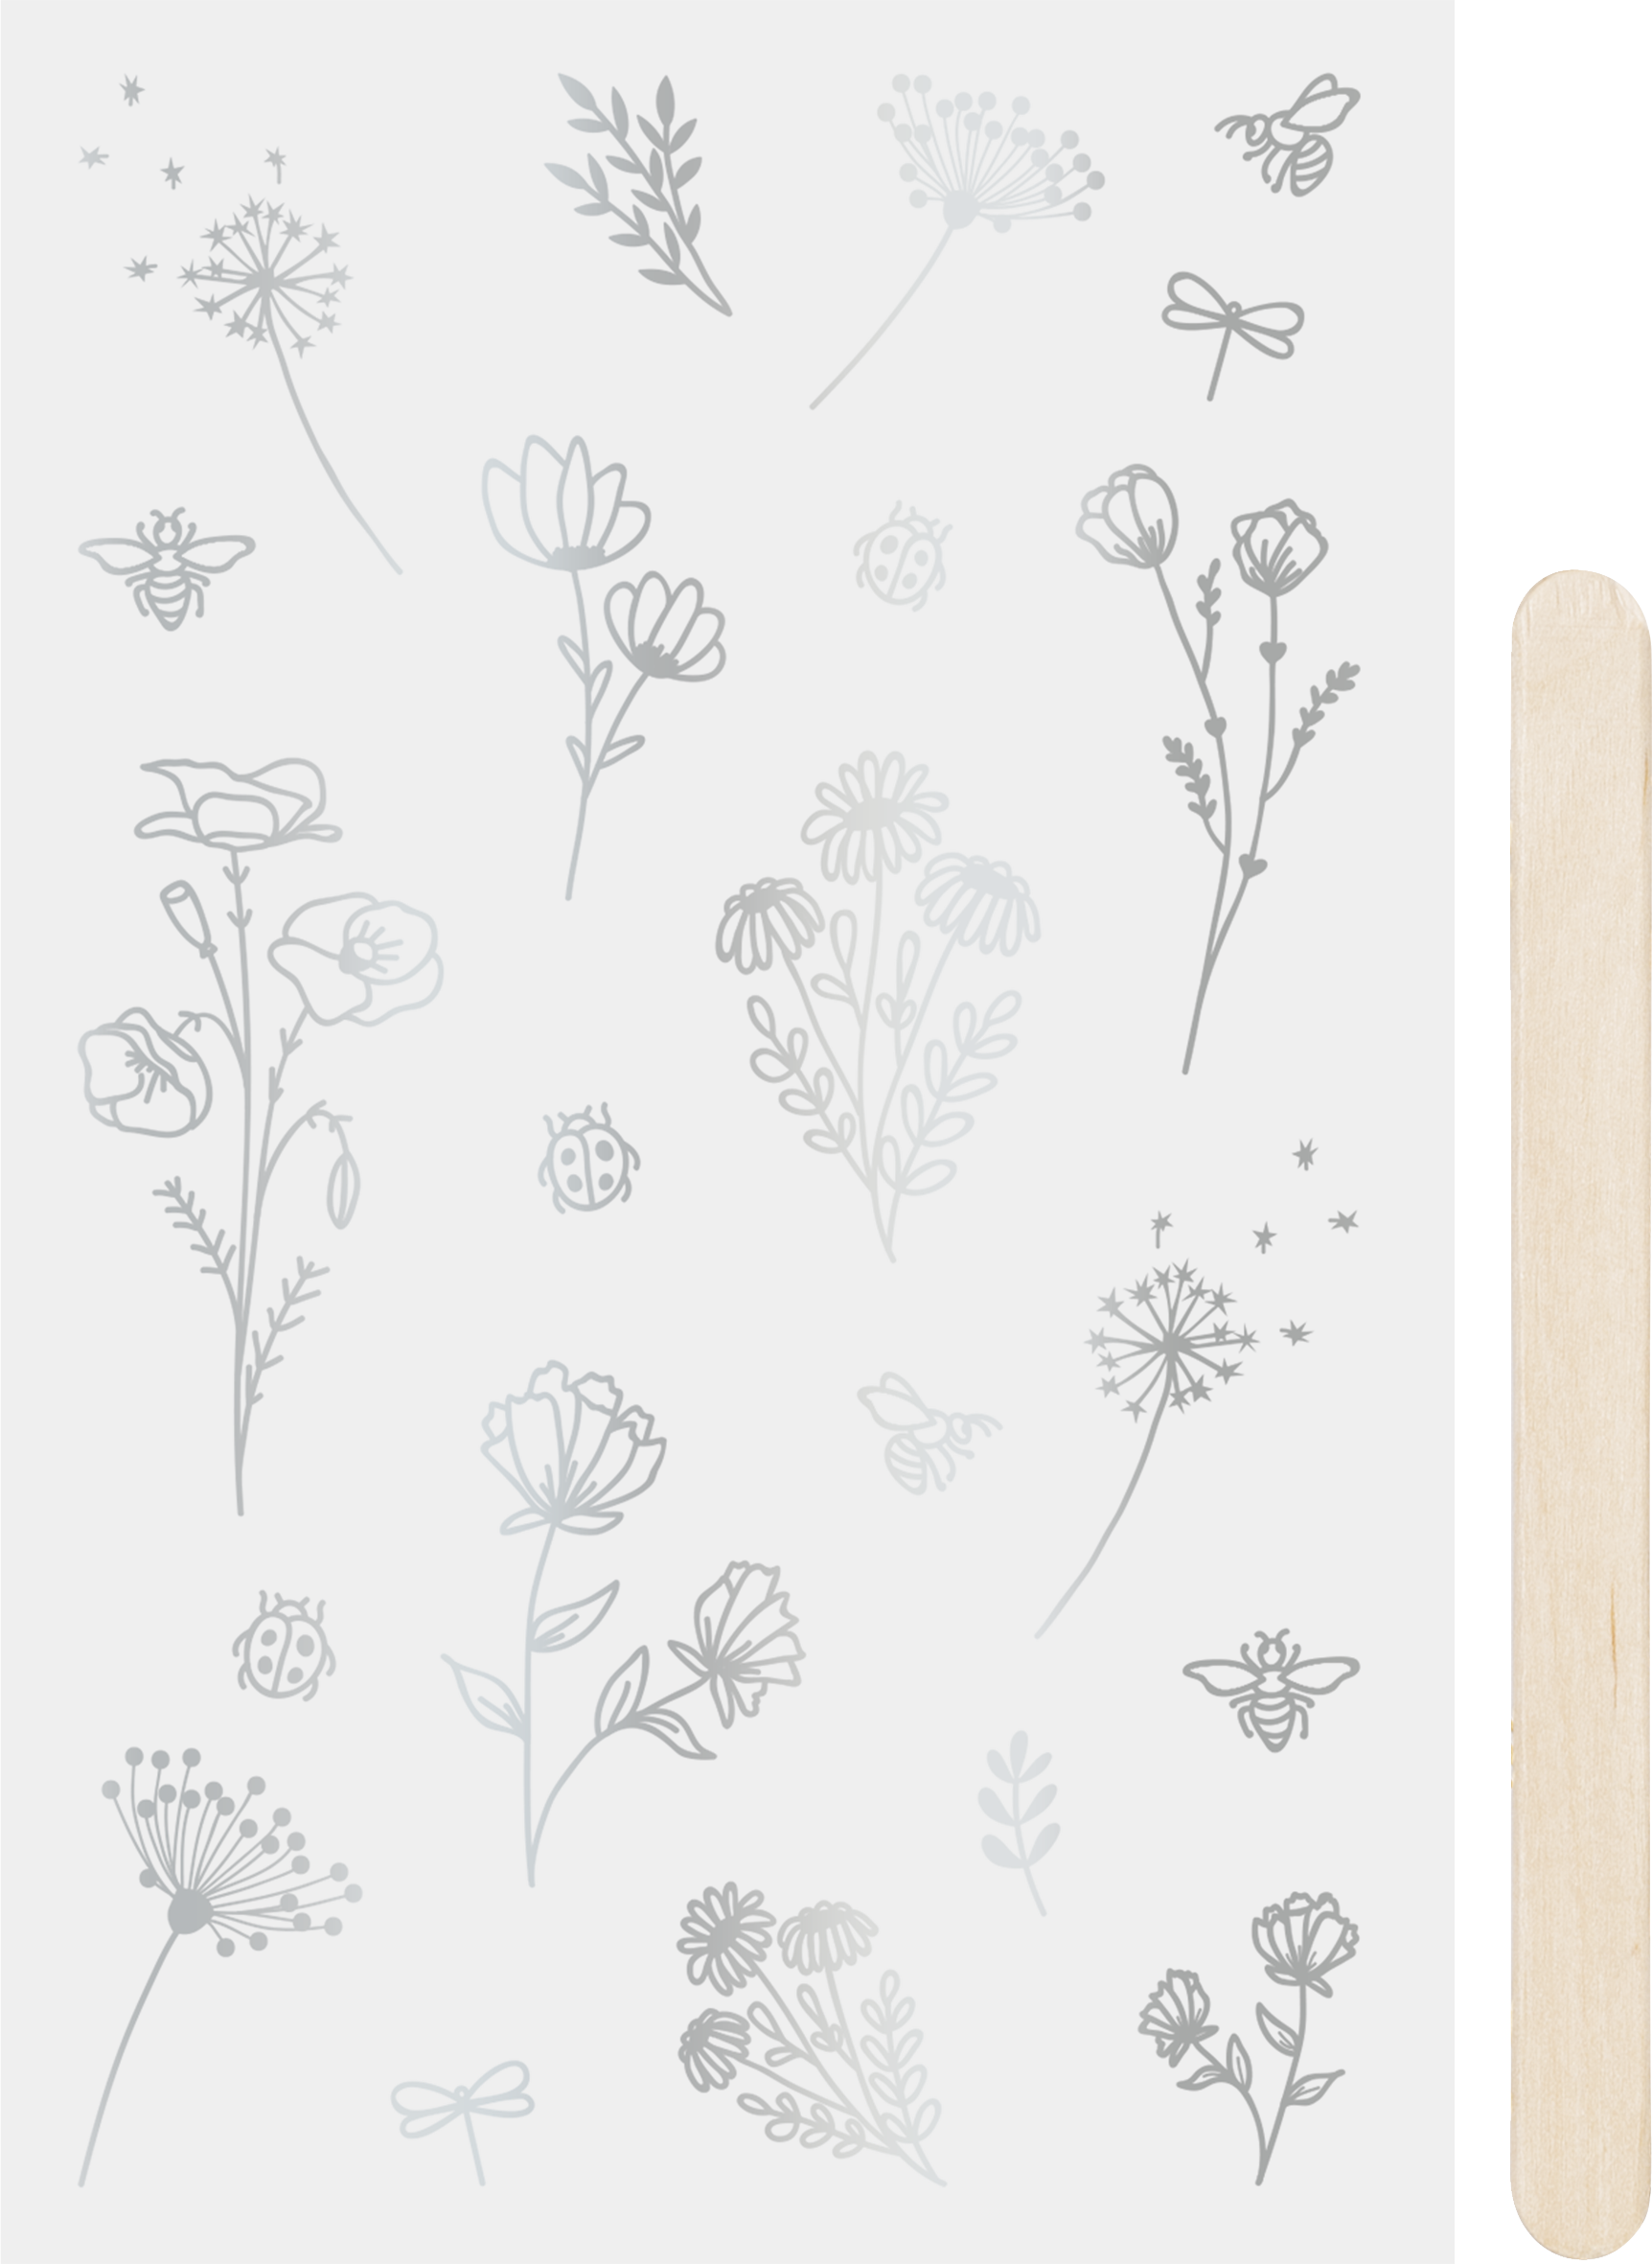 Rubbel-Sticker "Blumen" 10 x 19 cm